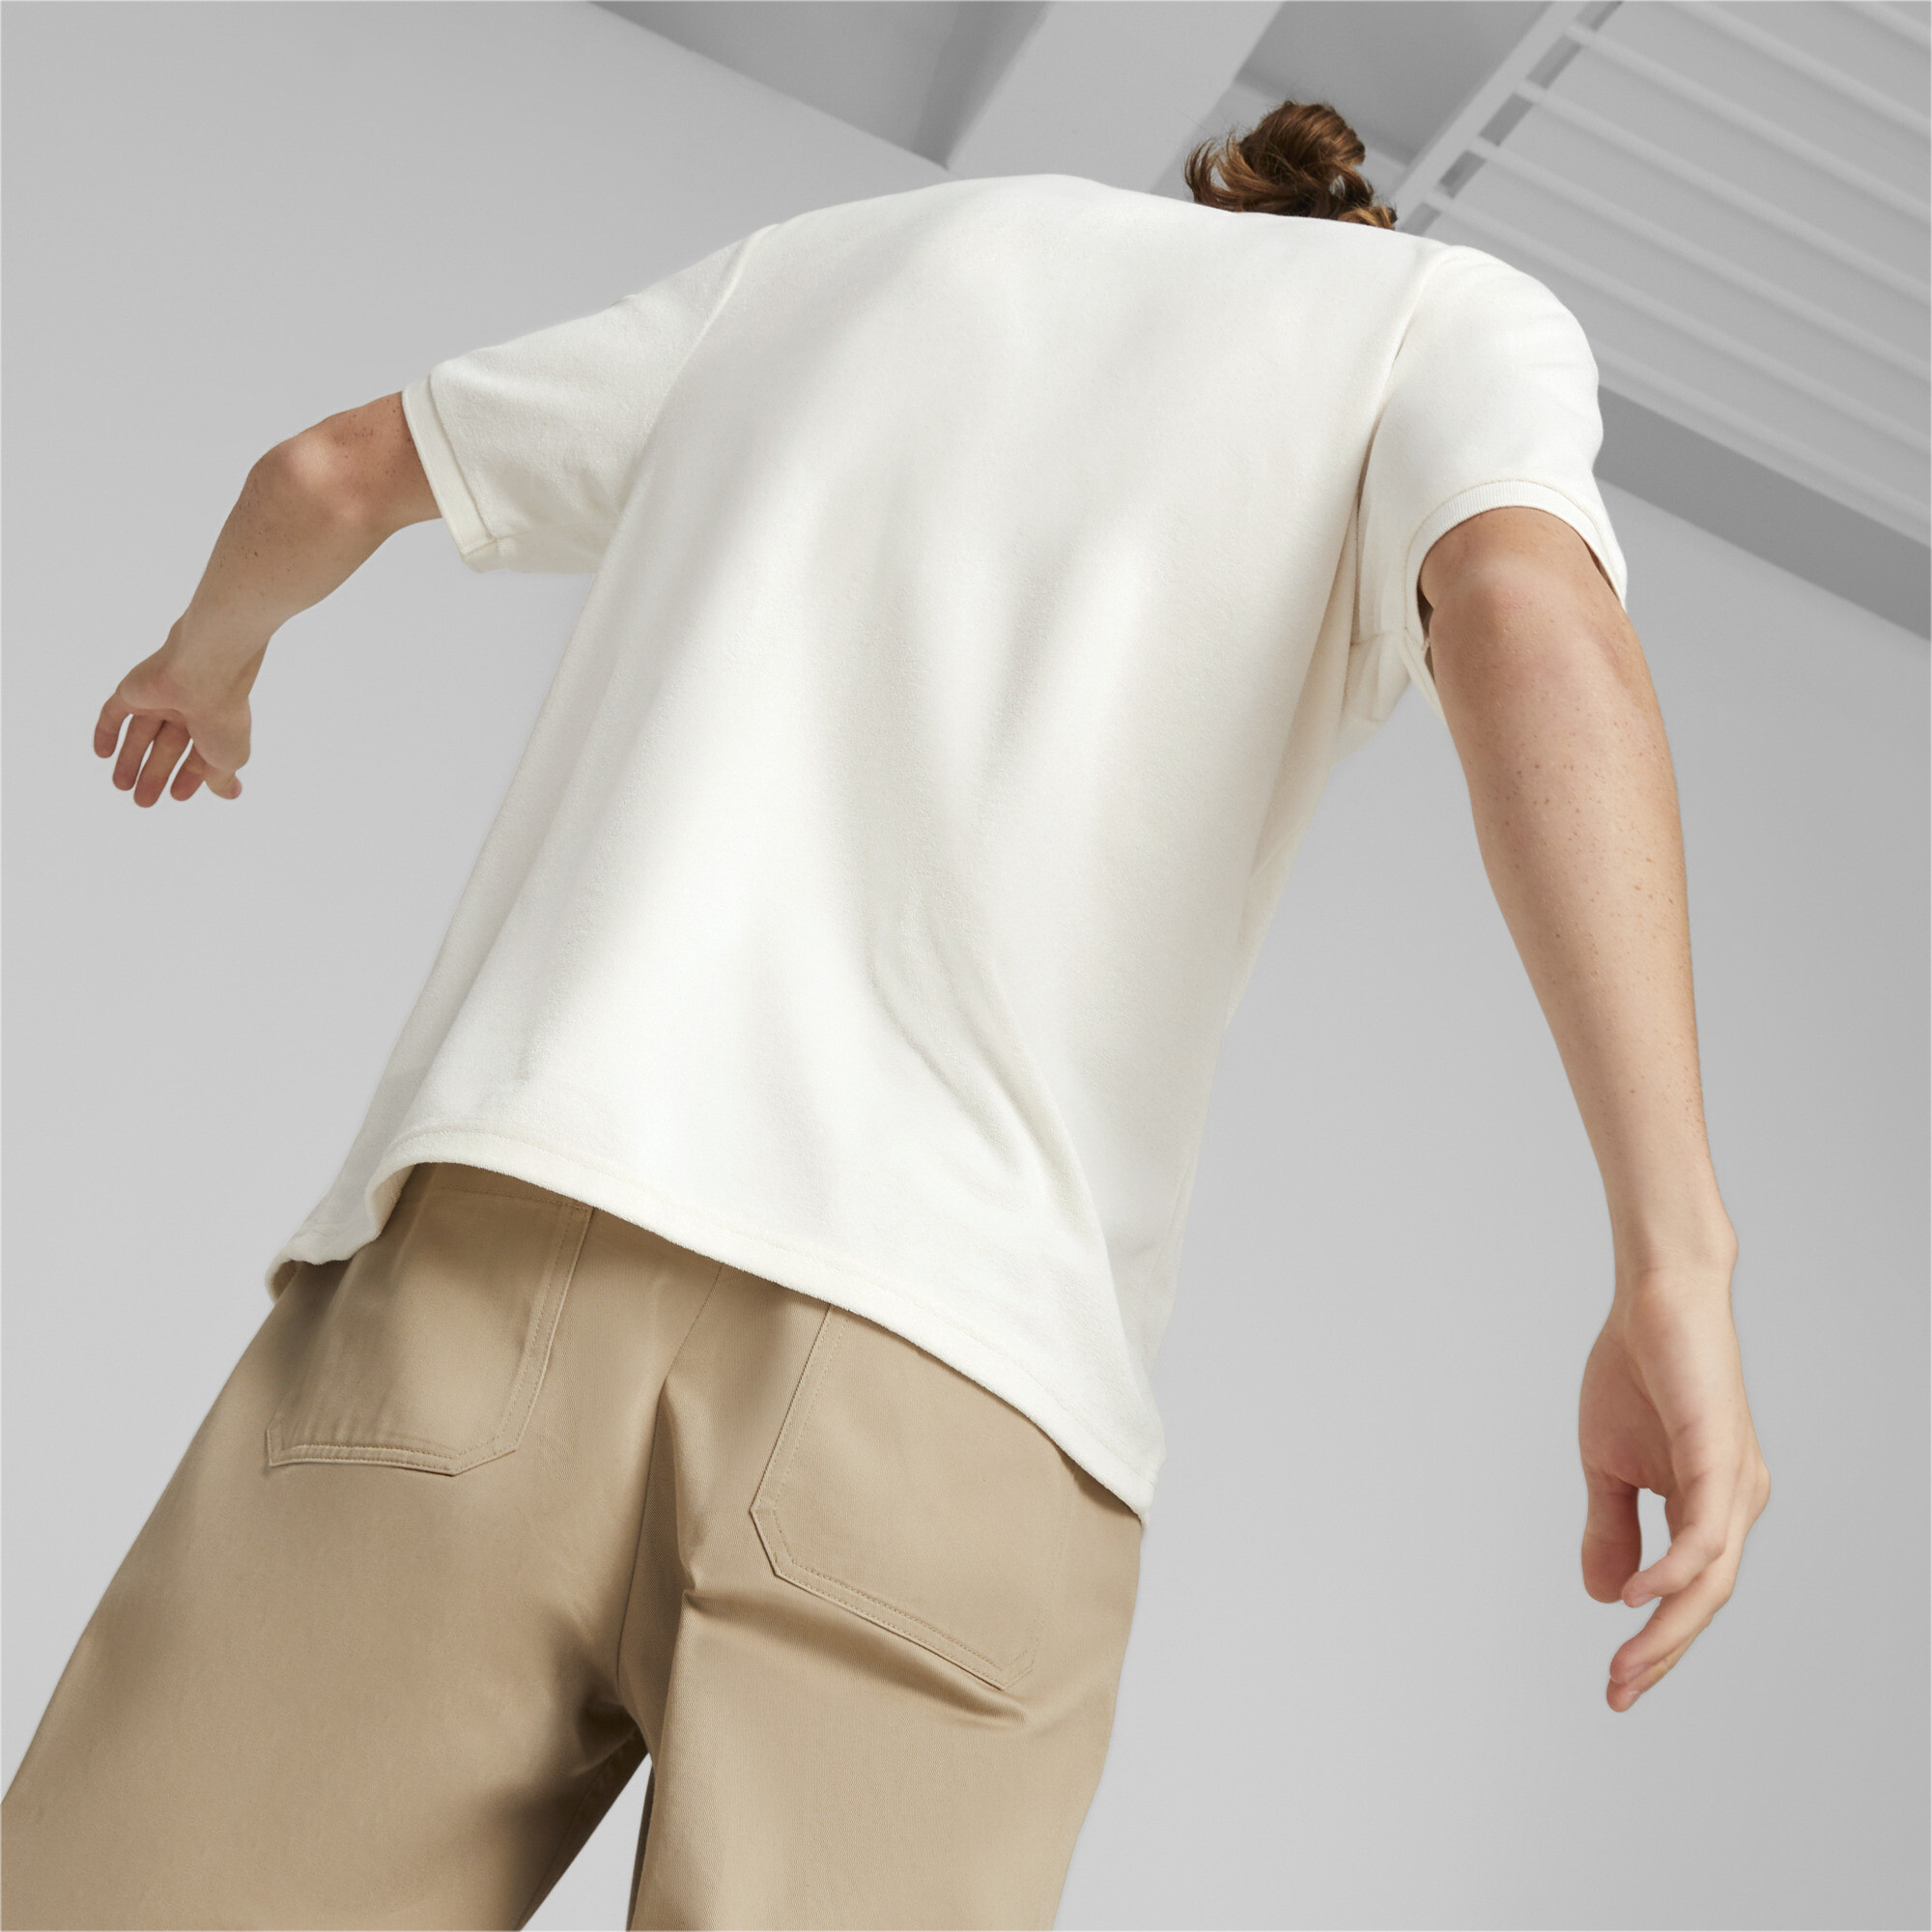 Men's Puma Classics Towelling Polo Shirt T-Shirt, White T-Shirt, Size L T-Shirt, Clothing